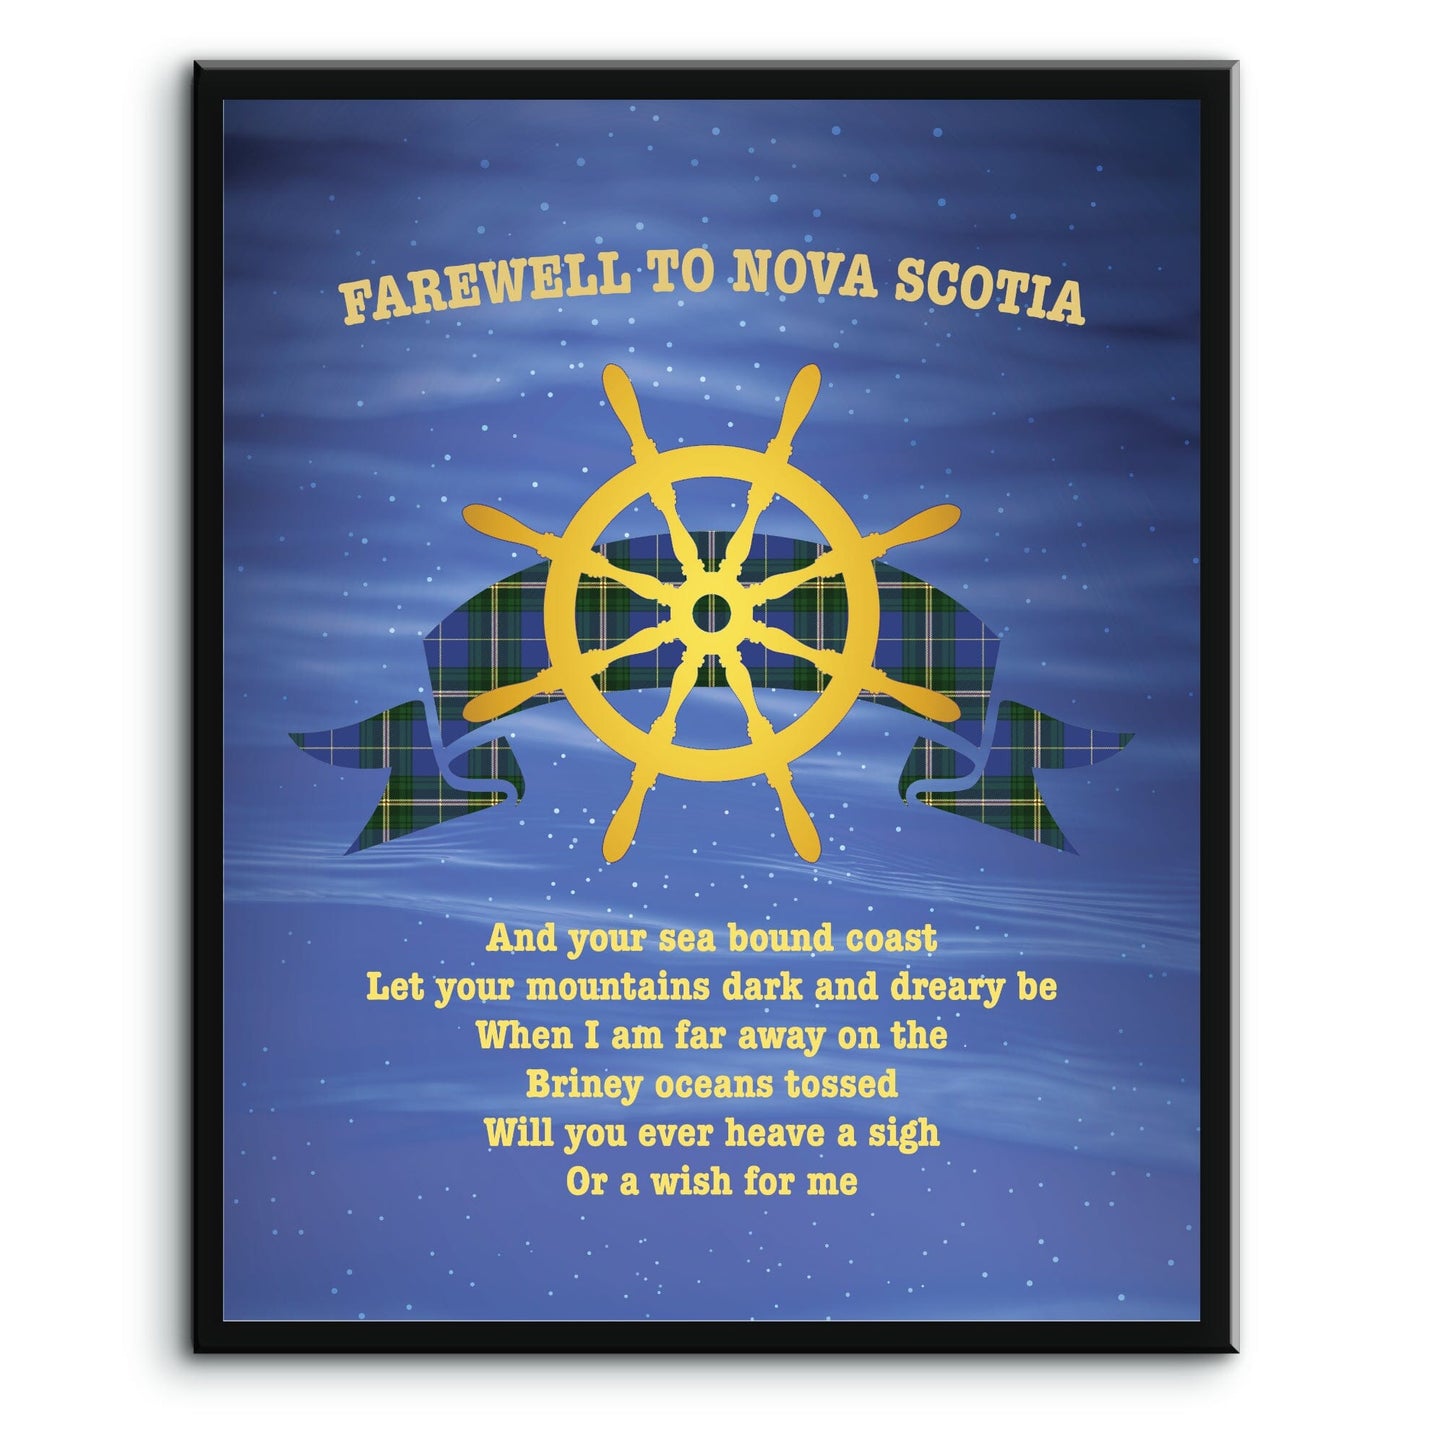 Farewell to Nova Scotia by the Irish Rovers - Wall Art Print Song Lyrics Art Song Lyrics Art 8x10 Plaque Mount 